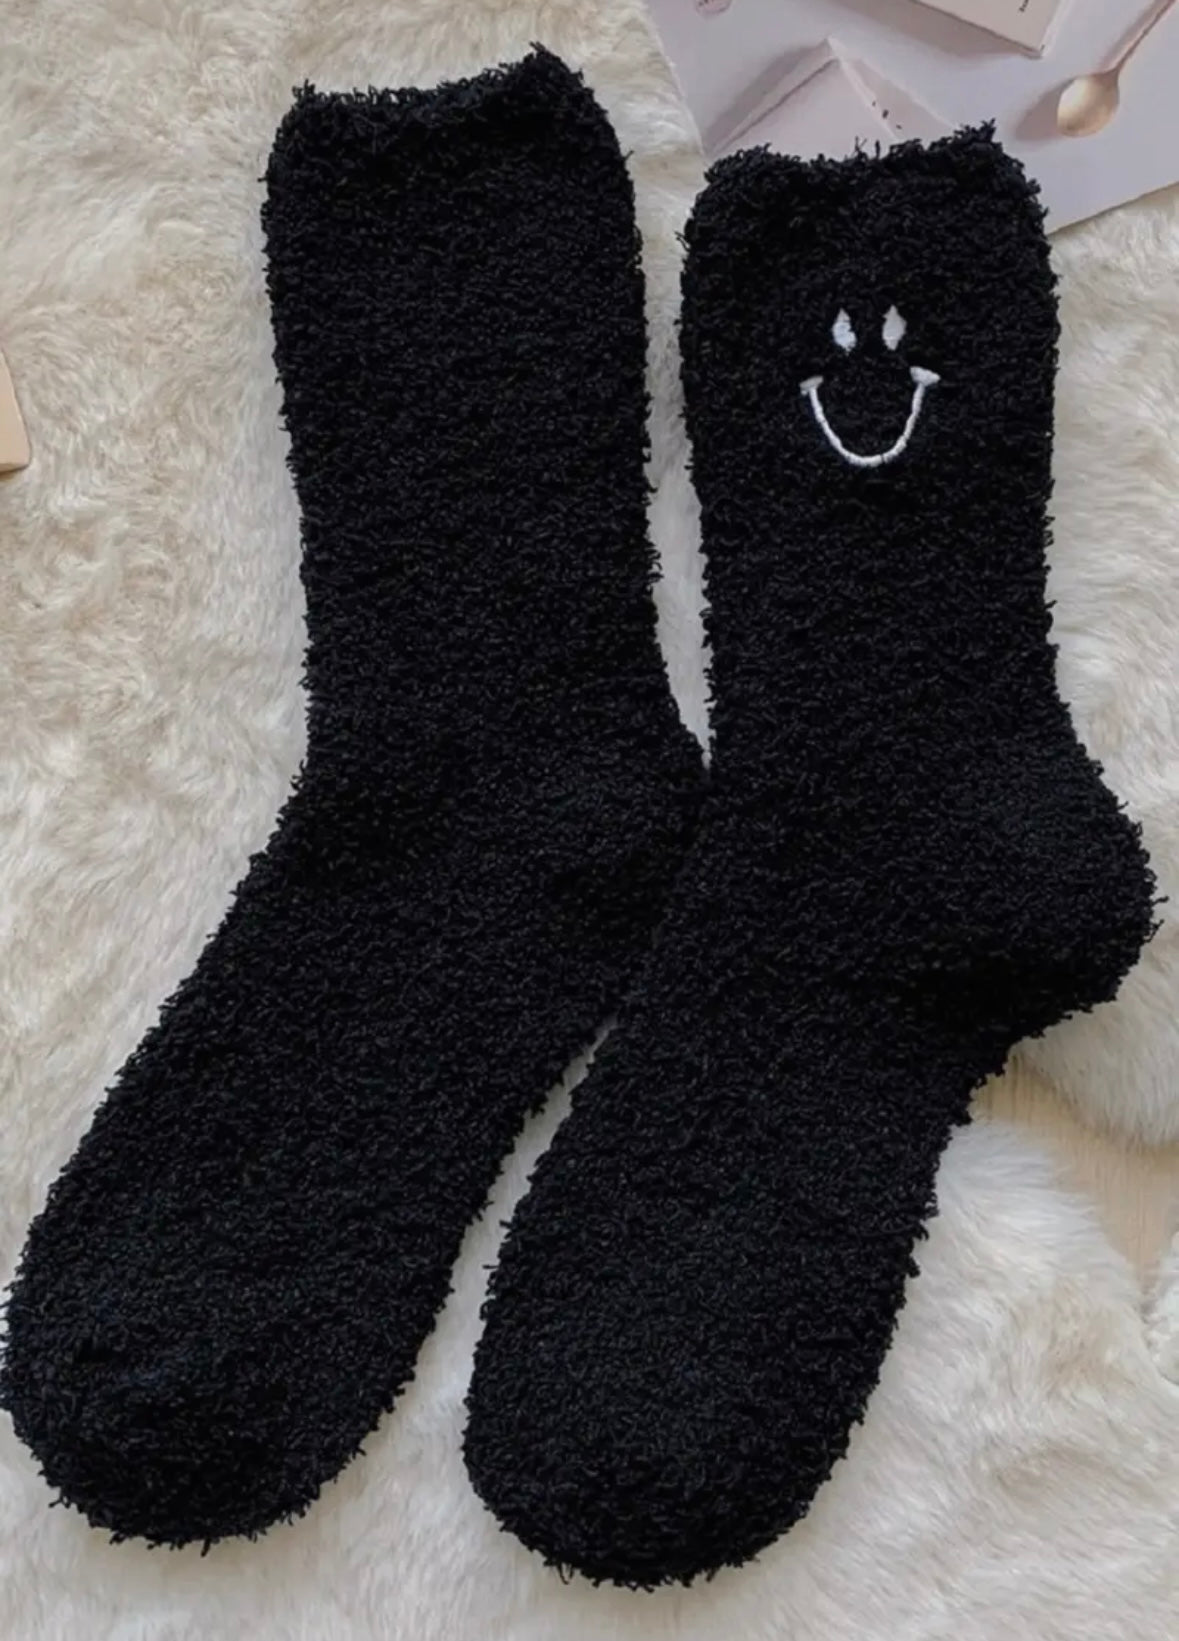 Smiley sock